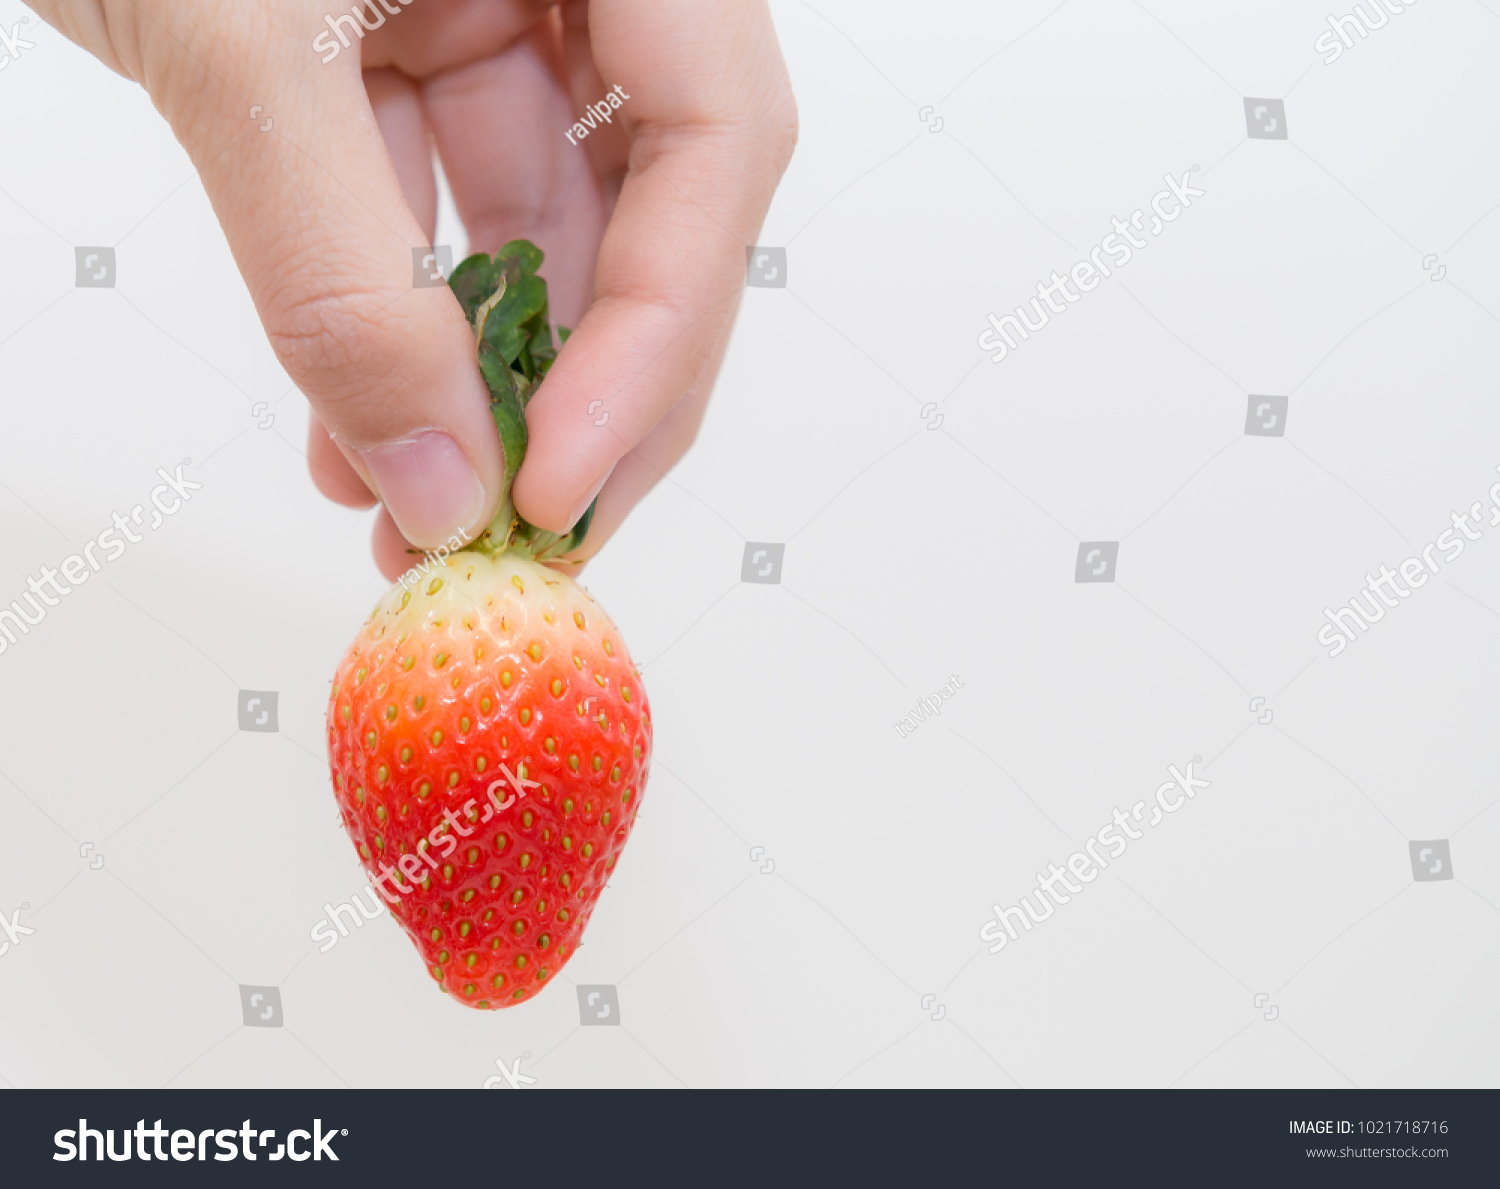 Hand holding strawberry on white background,Fresh strawberry in hand on white background, #1021718716